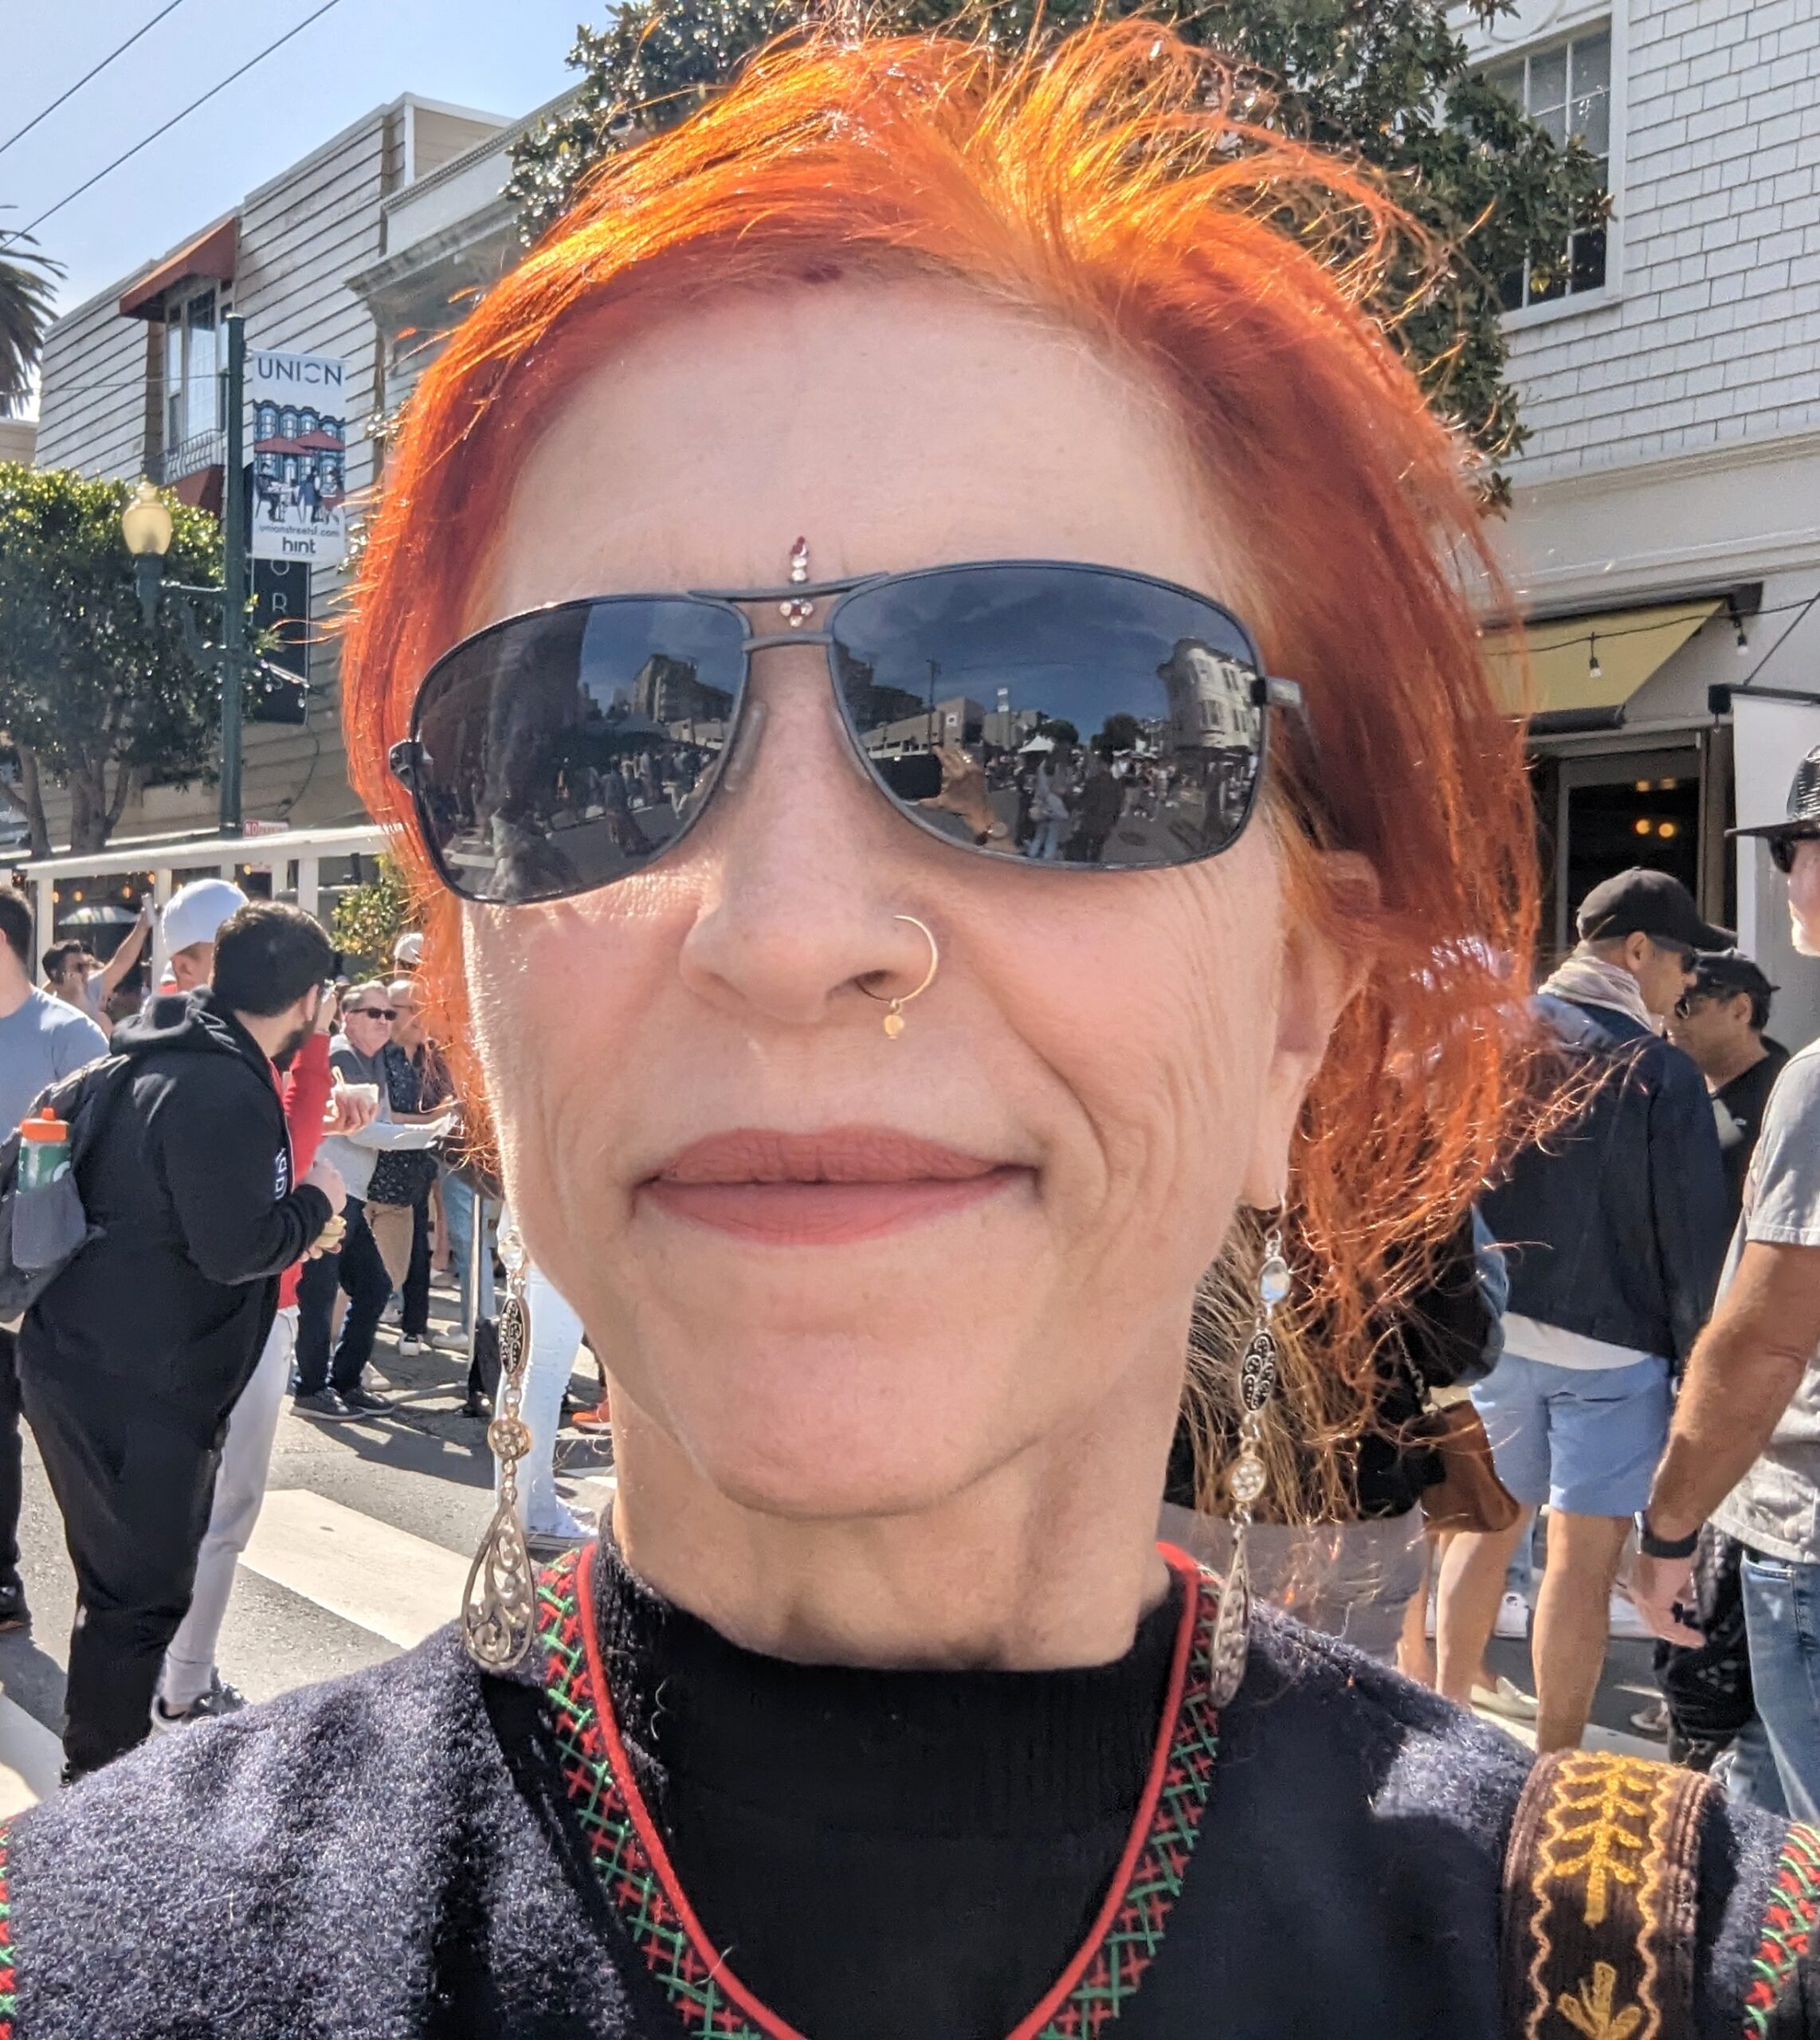 Woman with red hair at cultural street fair in San Francisco.